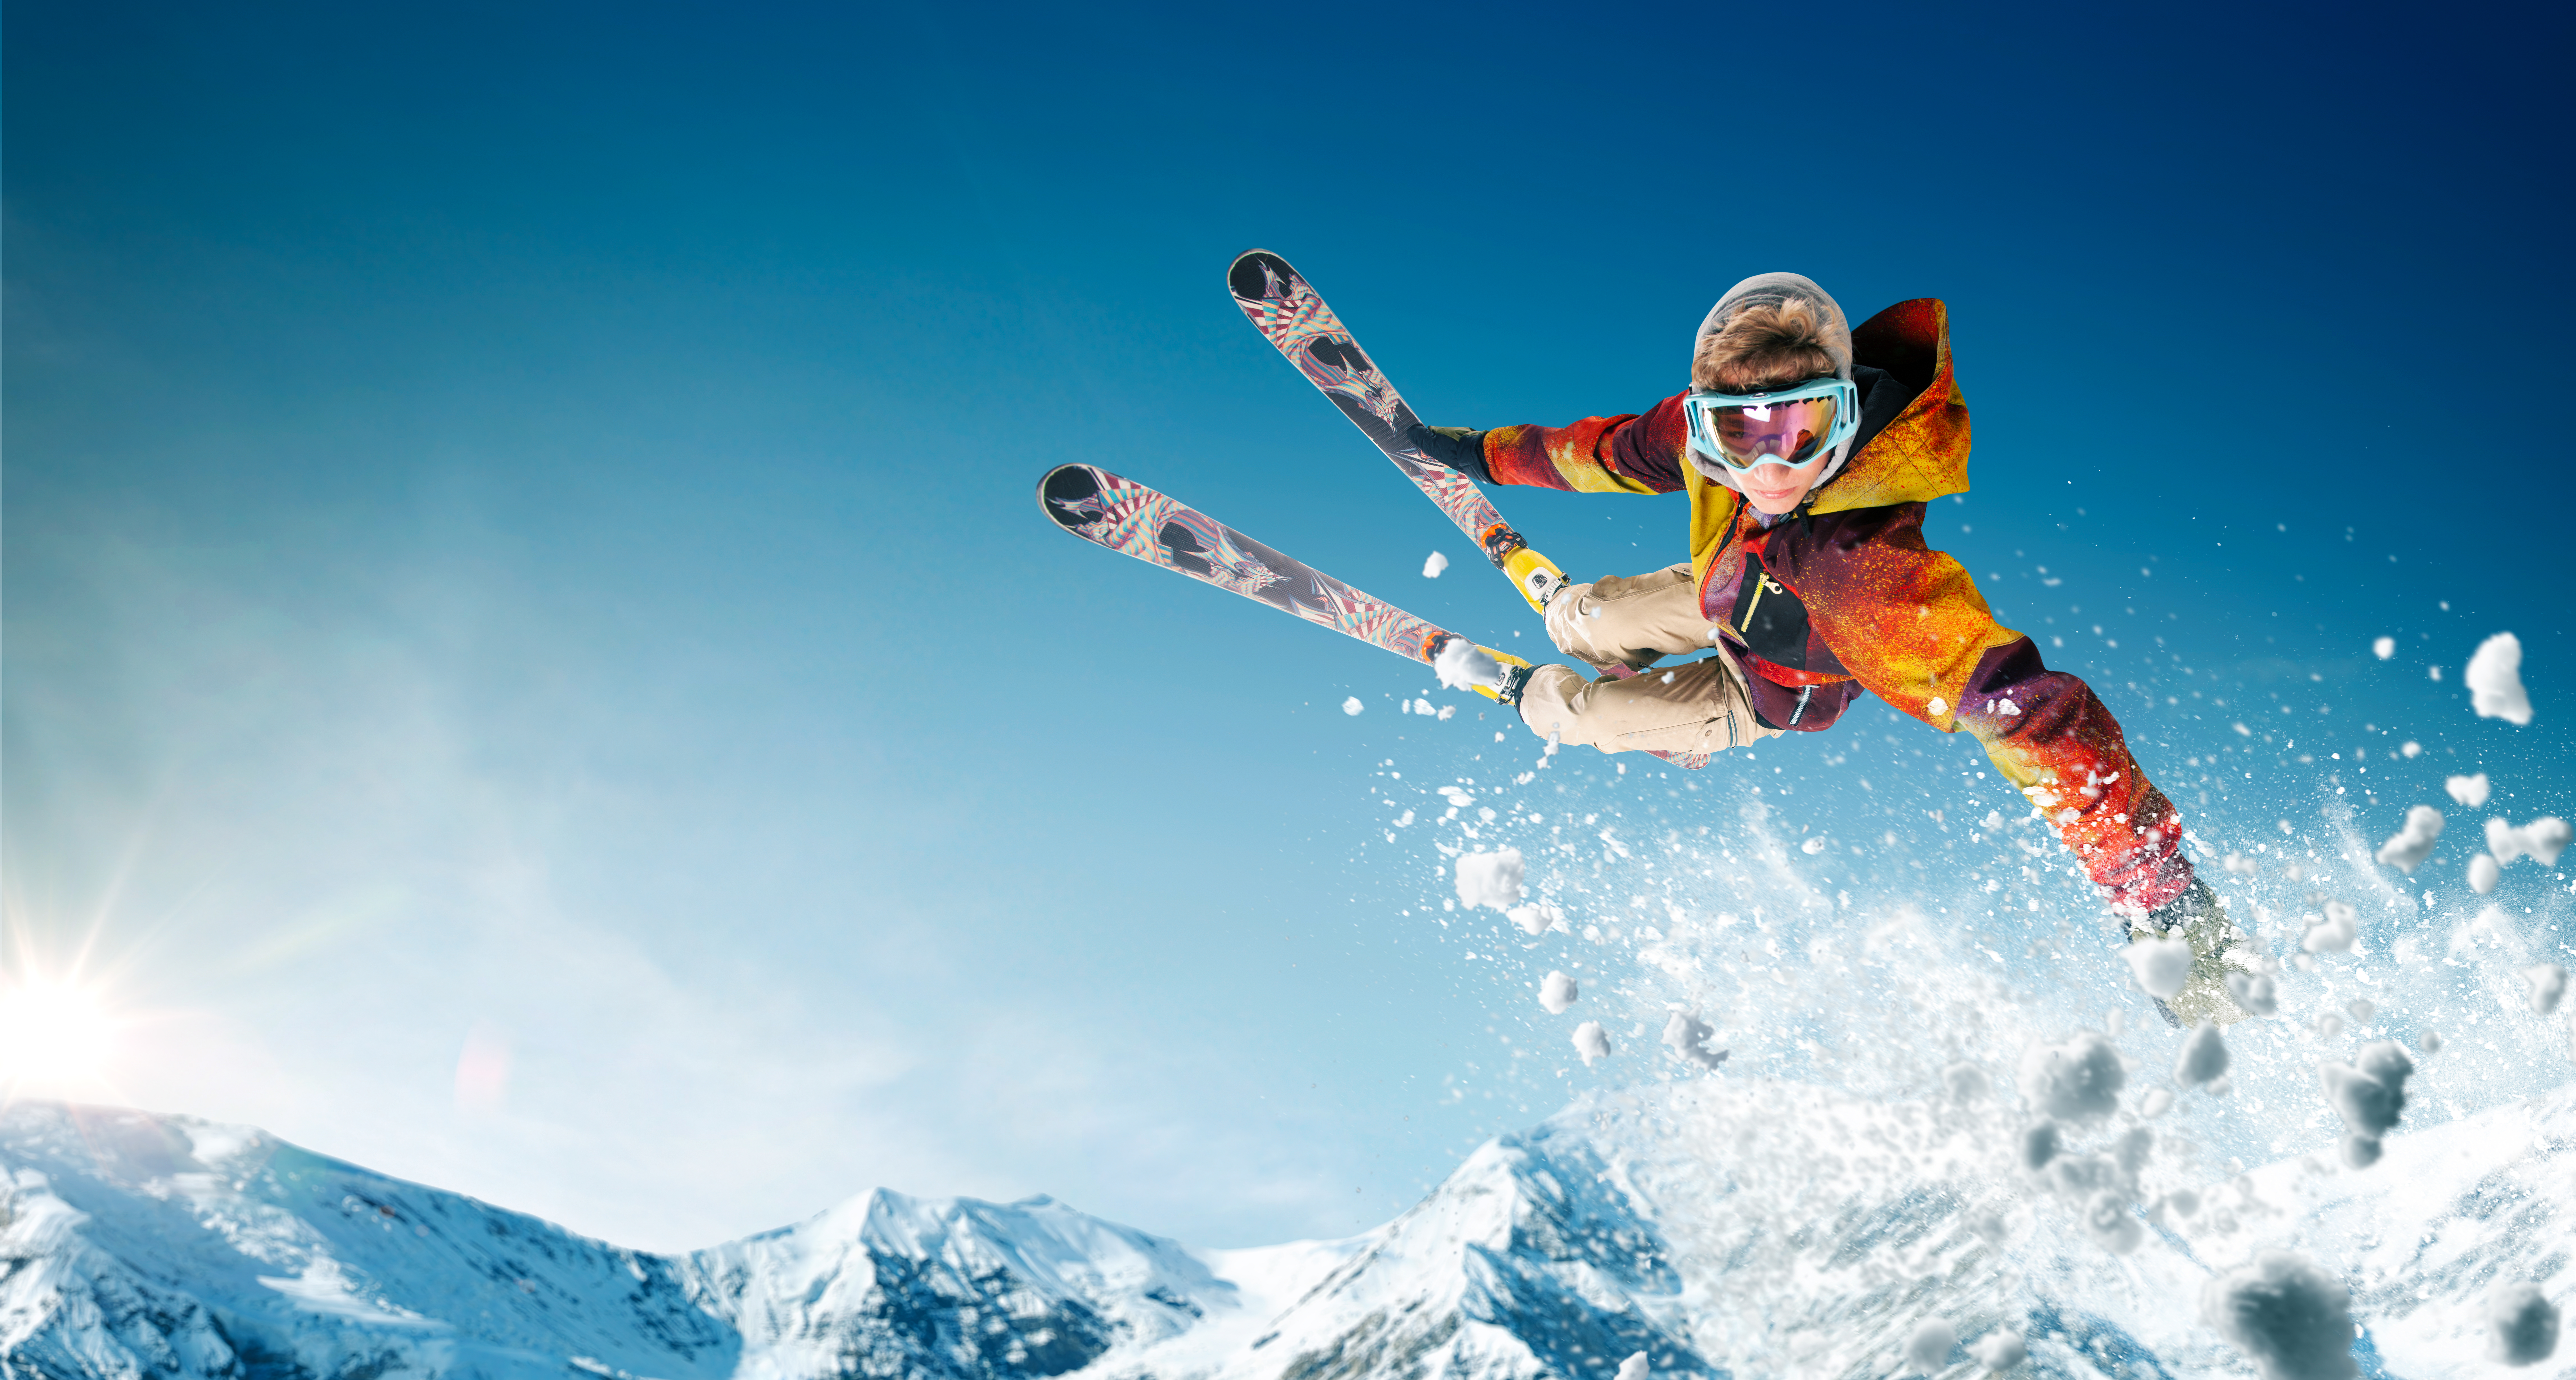 A skier doing a ski jump